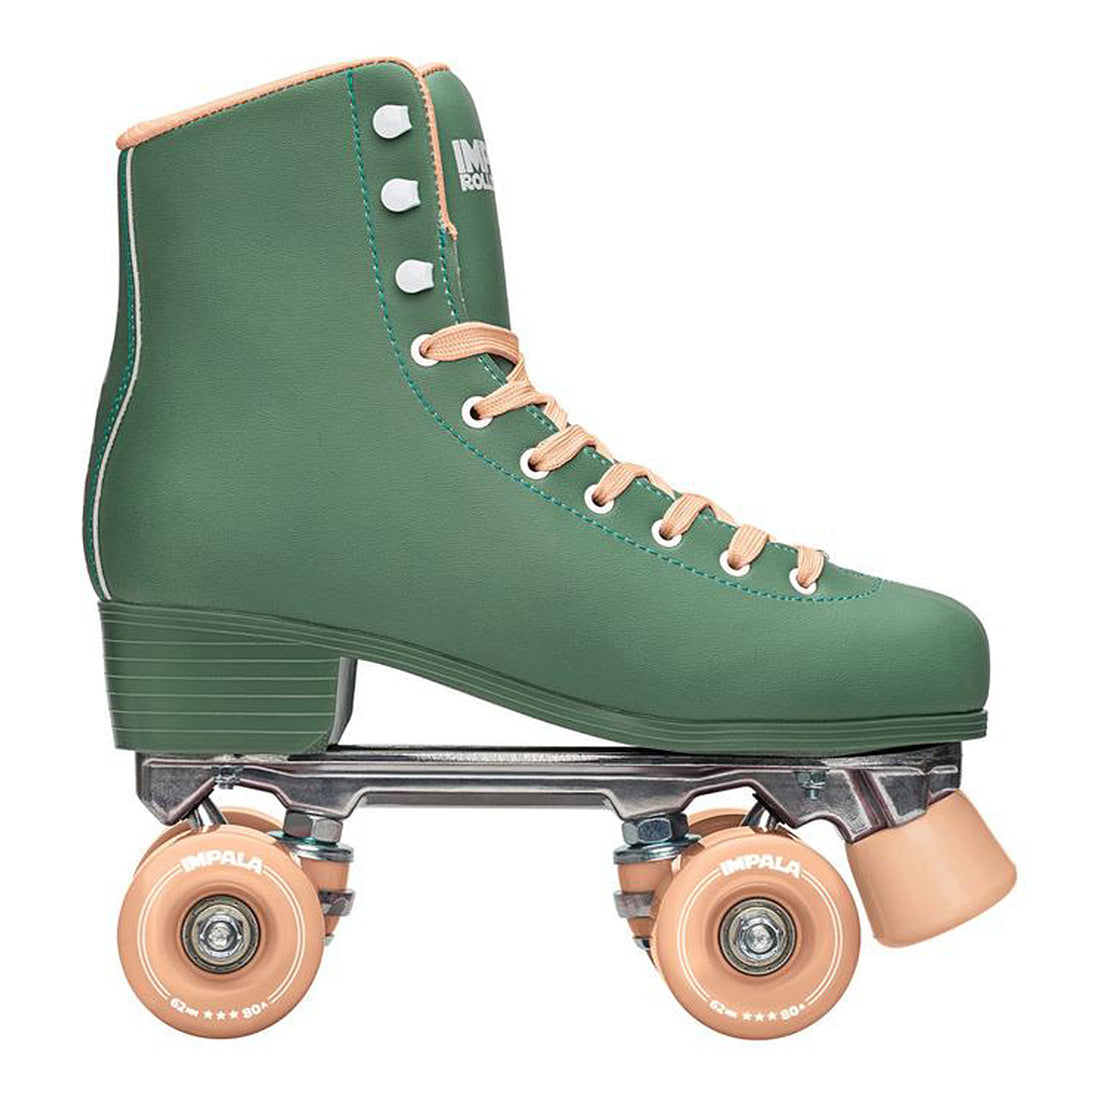 Impala Sidewalk - Forest Green Roller Skates